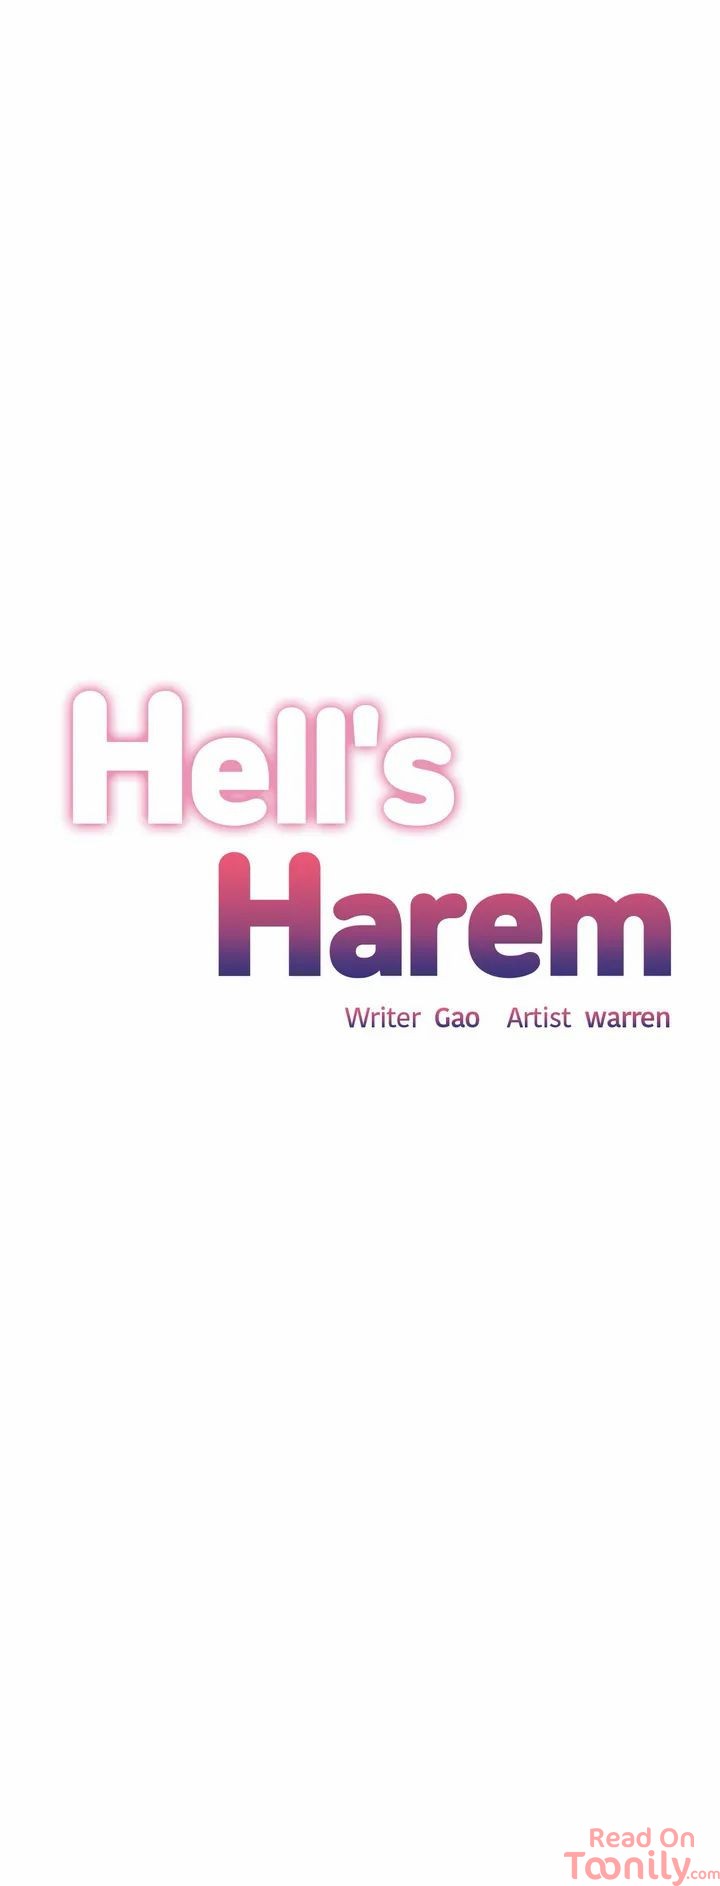 Hell’s Harem image